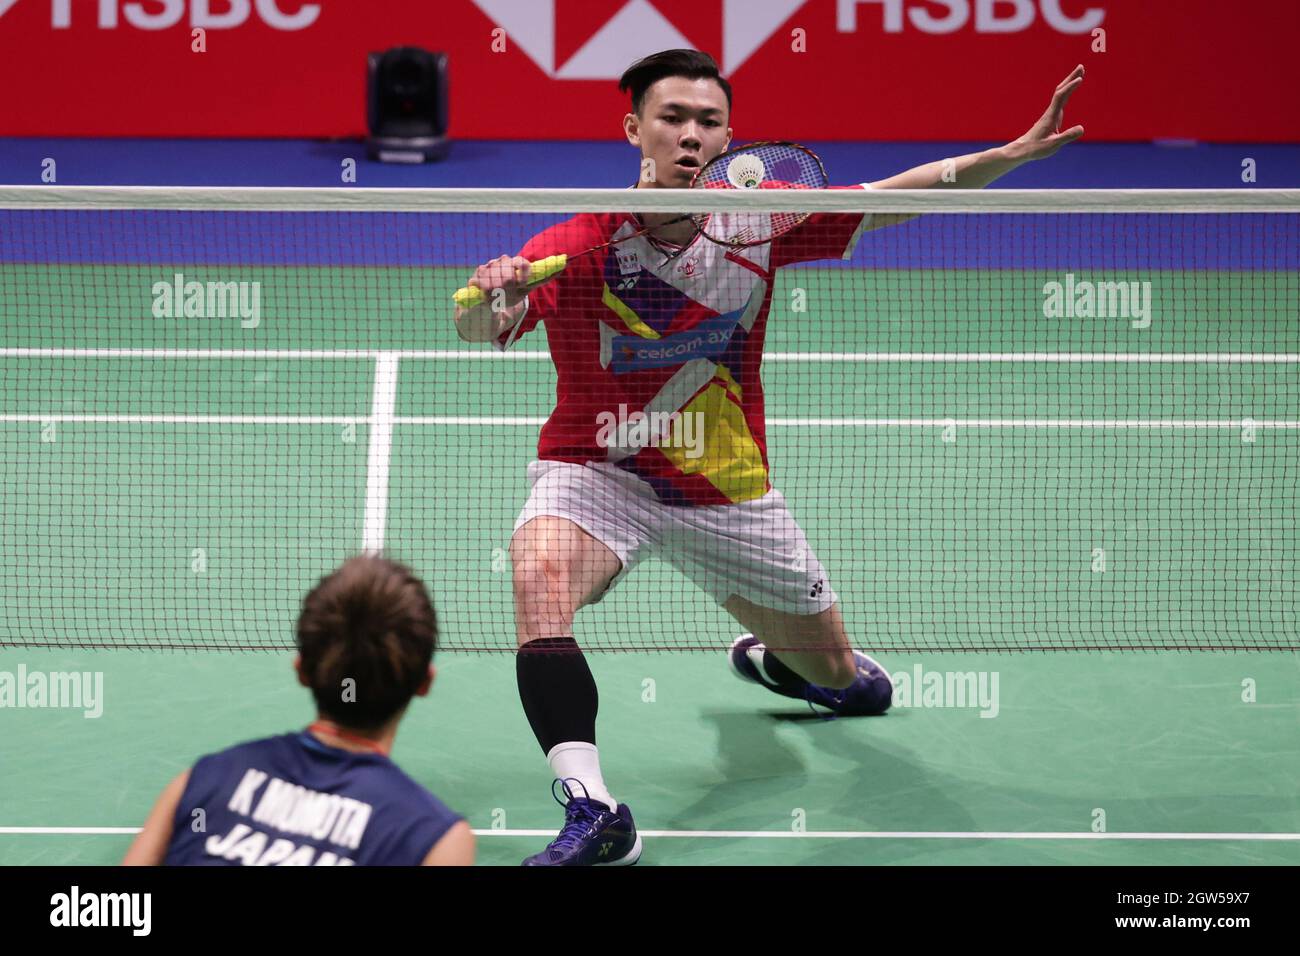 Malaysia vs japan badminton